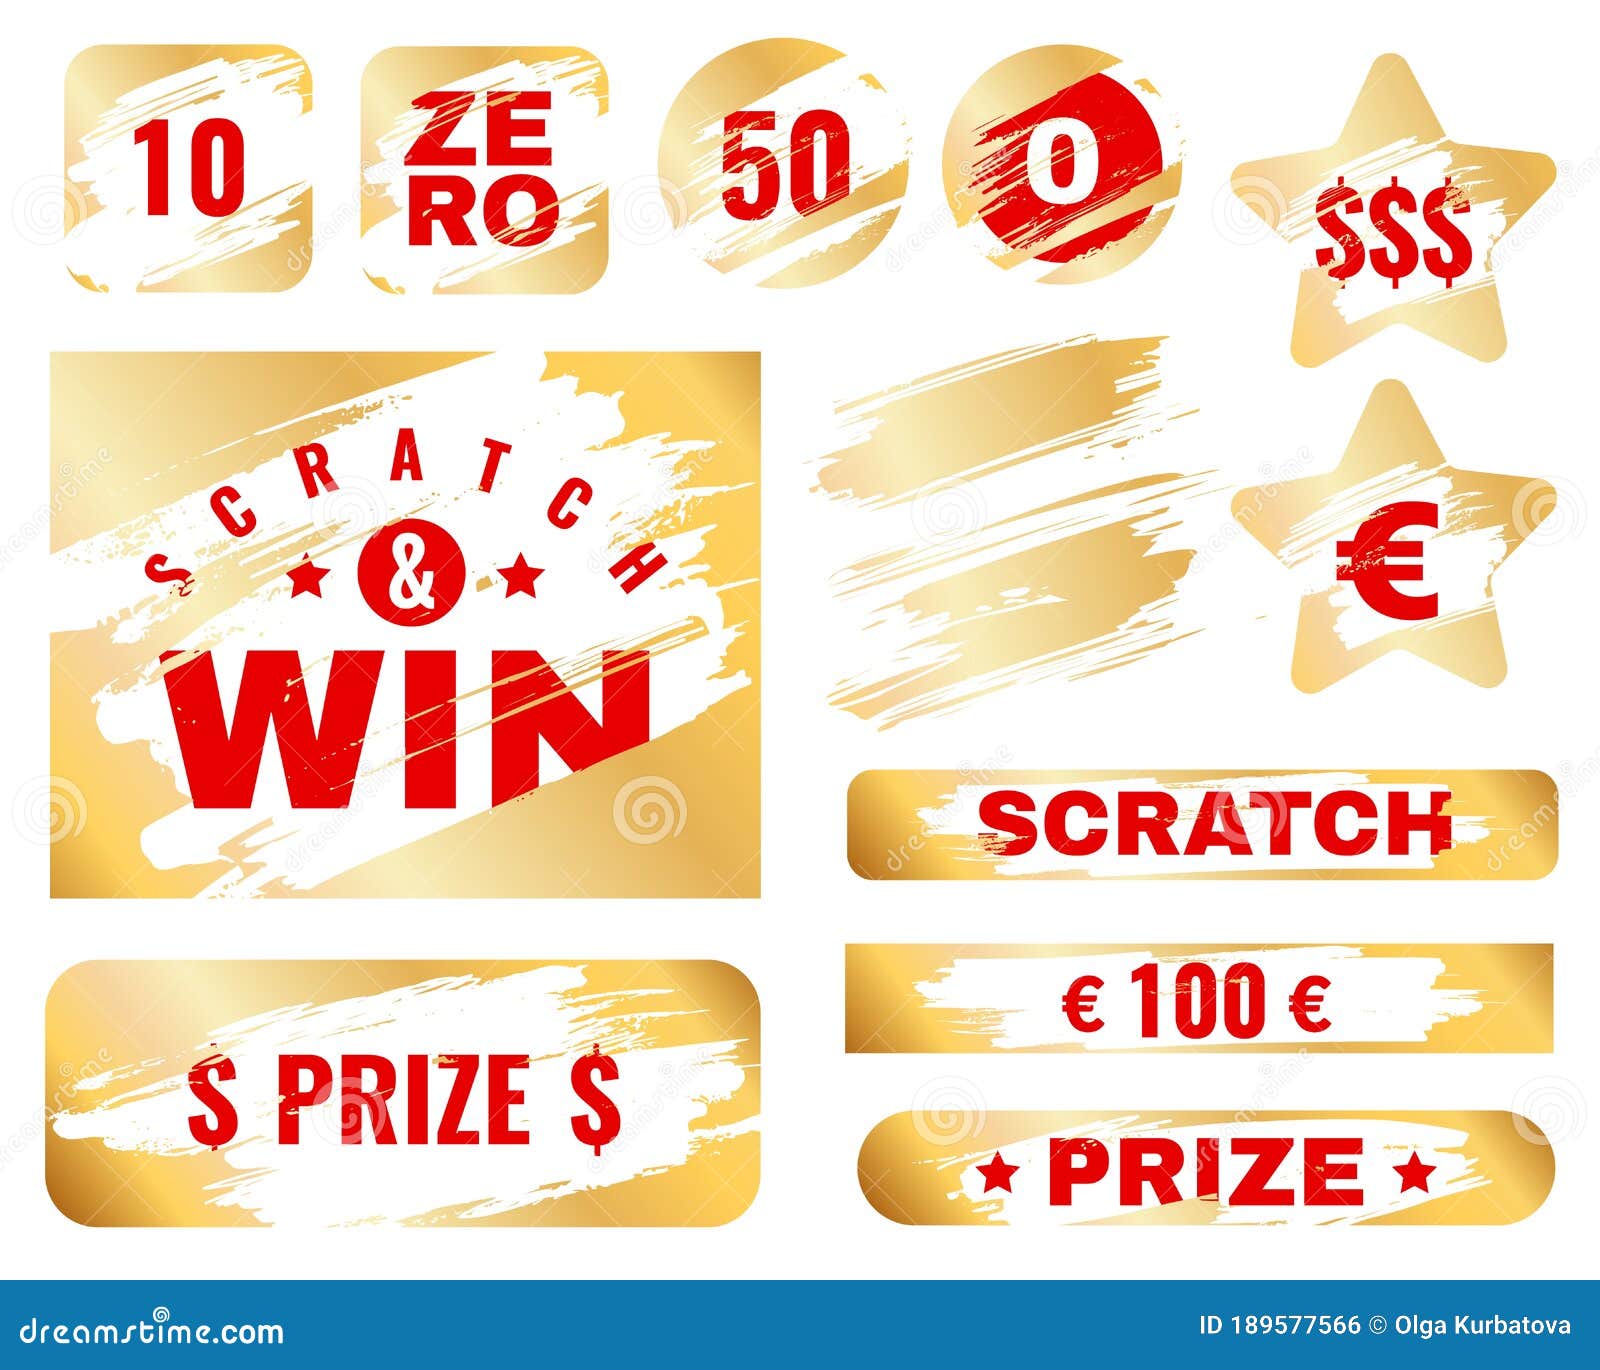 Golden Ticket Scratch Off Game - Scratch Cards Trade Show Instant Scratch & Win Game Classroom Scratch & Win Customer Appreciation Employee Appreciation 30 Pack